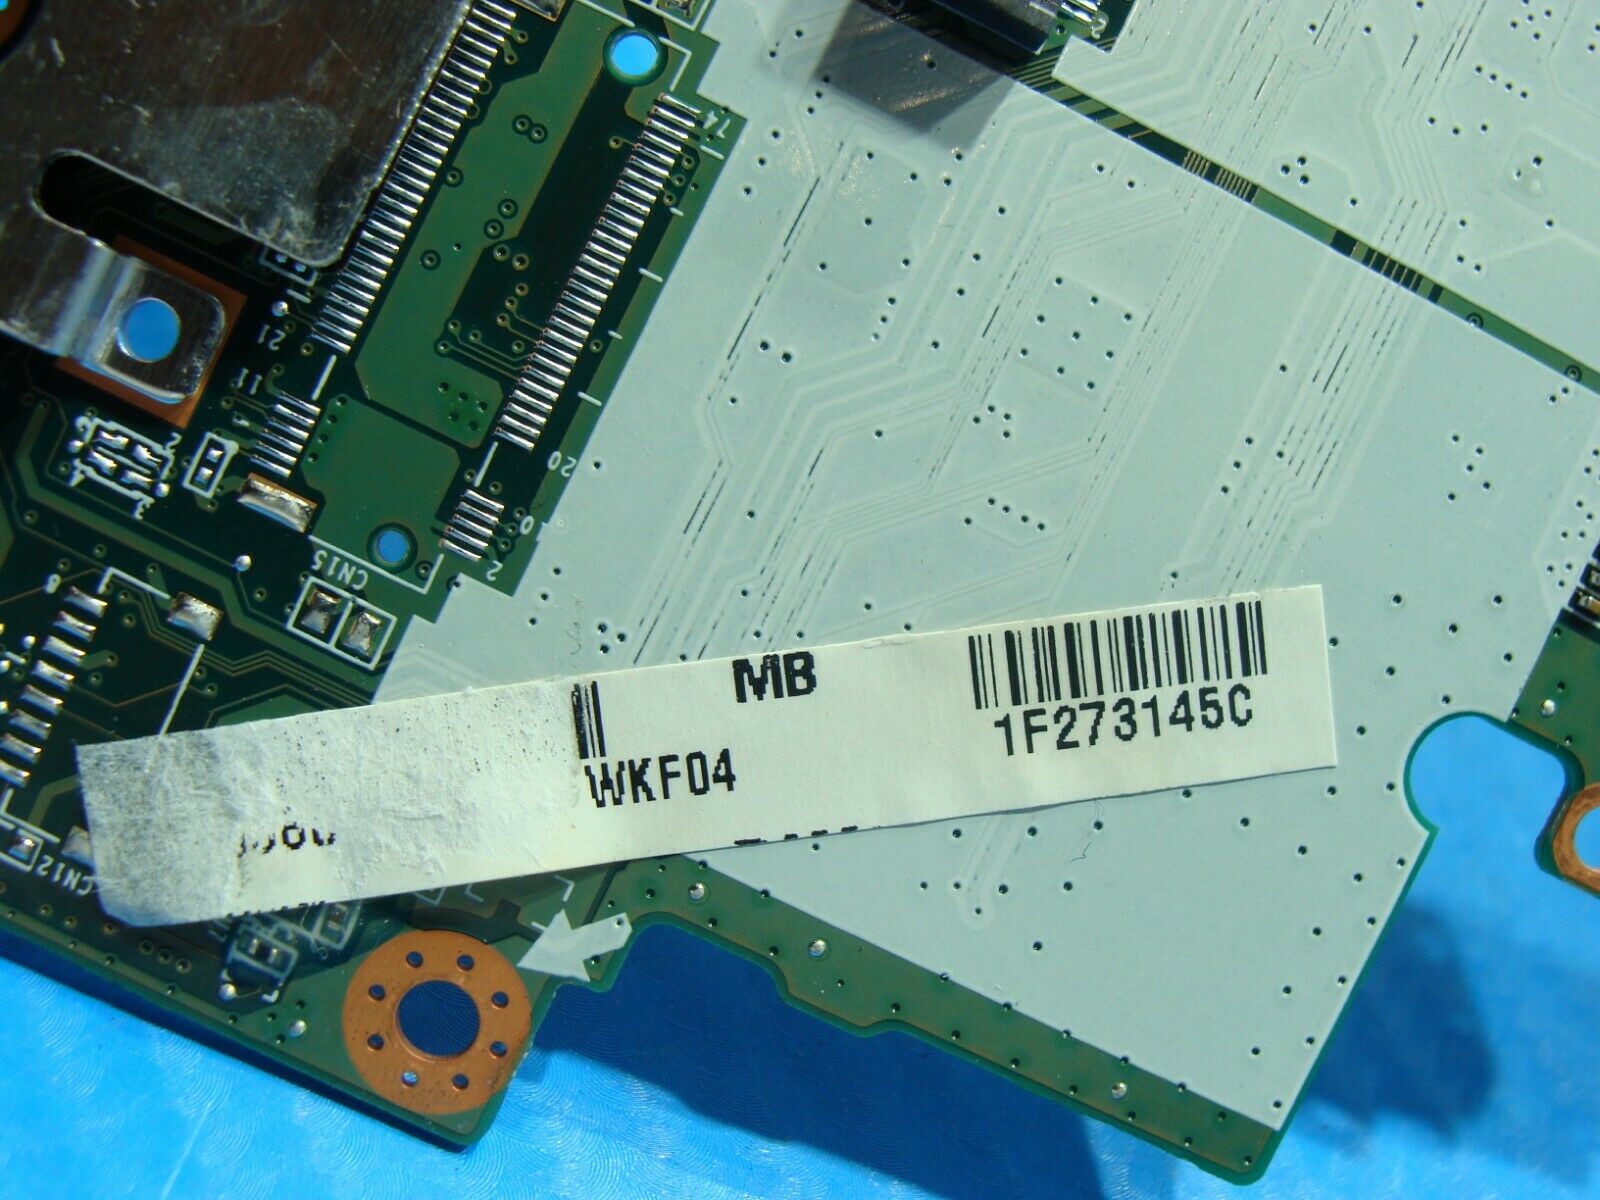 Toshiba Chromebook 2 CB35-B3340 13.3